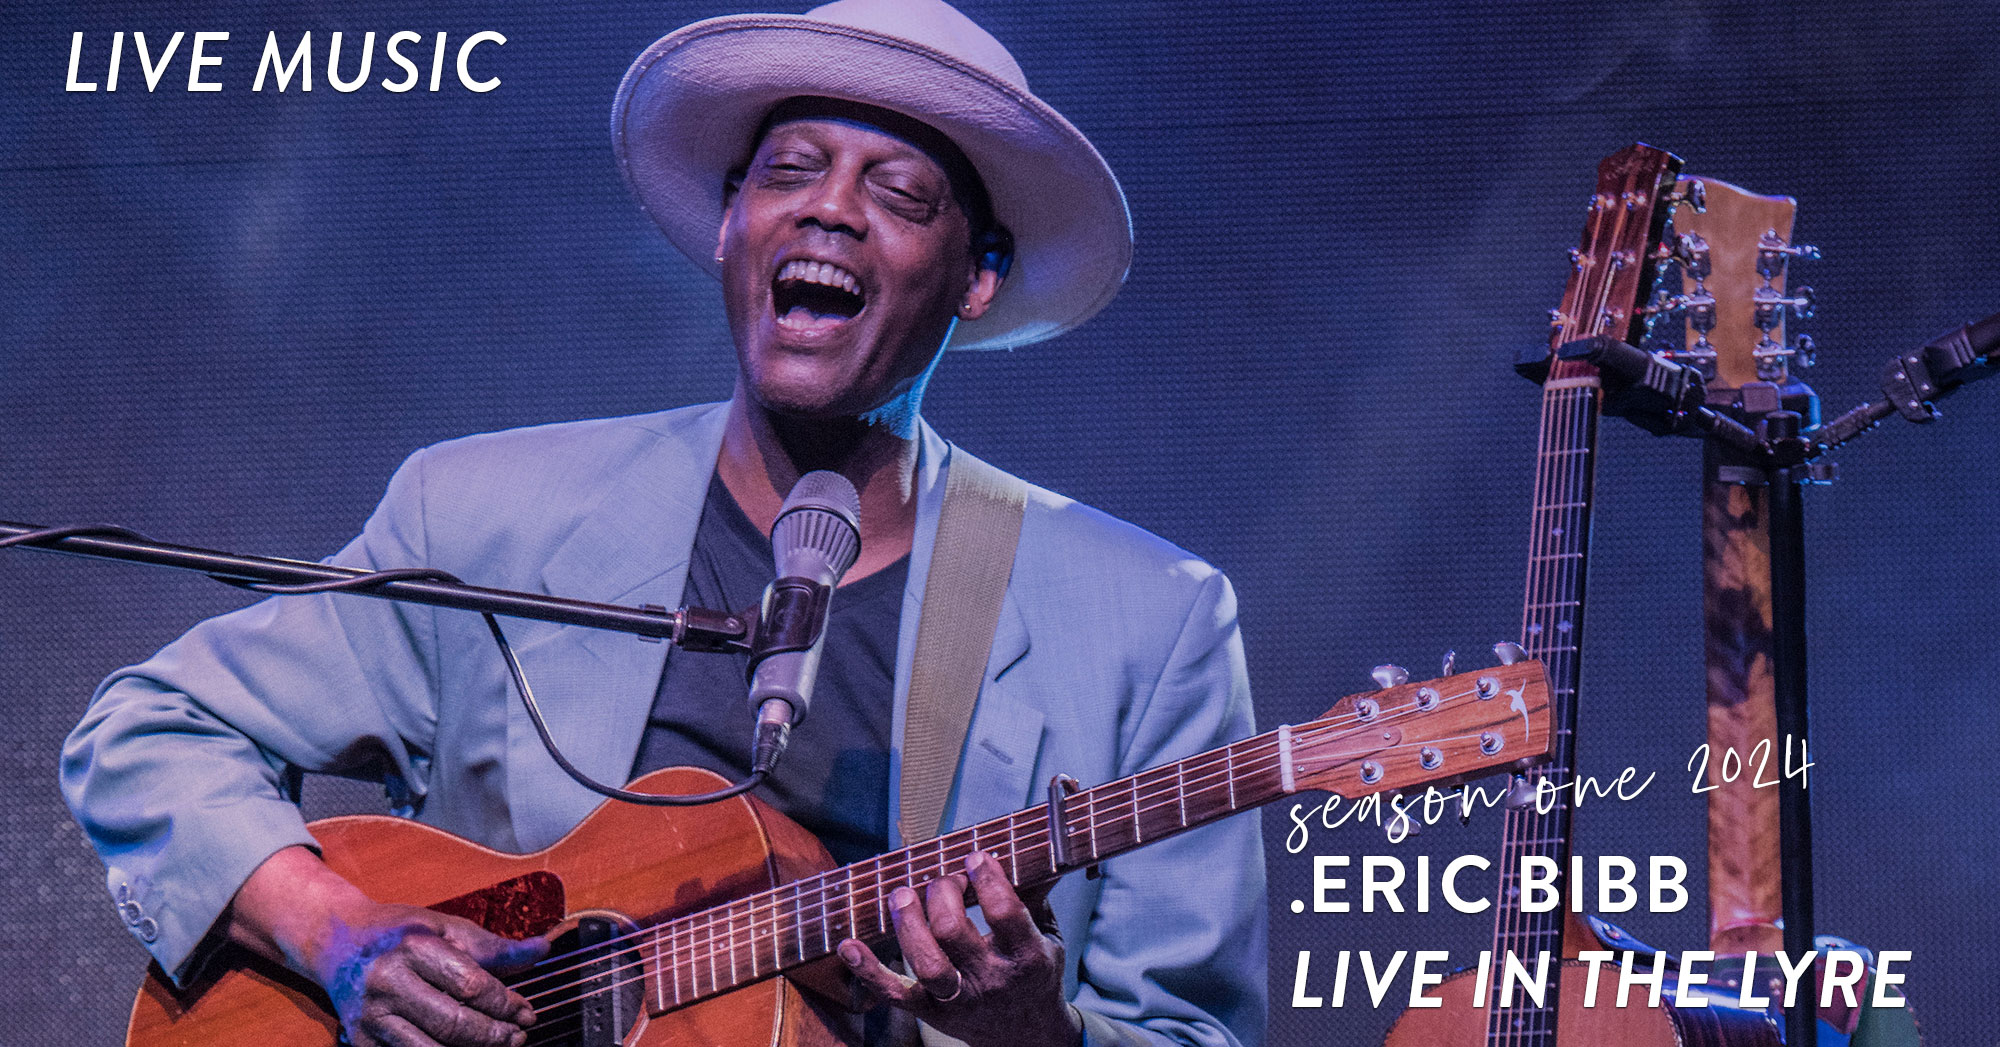 Eric Bibb ~ Live in the Lyre. The ultimate “blues brother” is coming to Burrinja. Sun 2 Jun 4.00pm | Burrinja Theatre